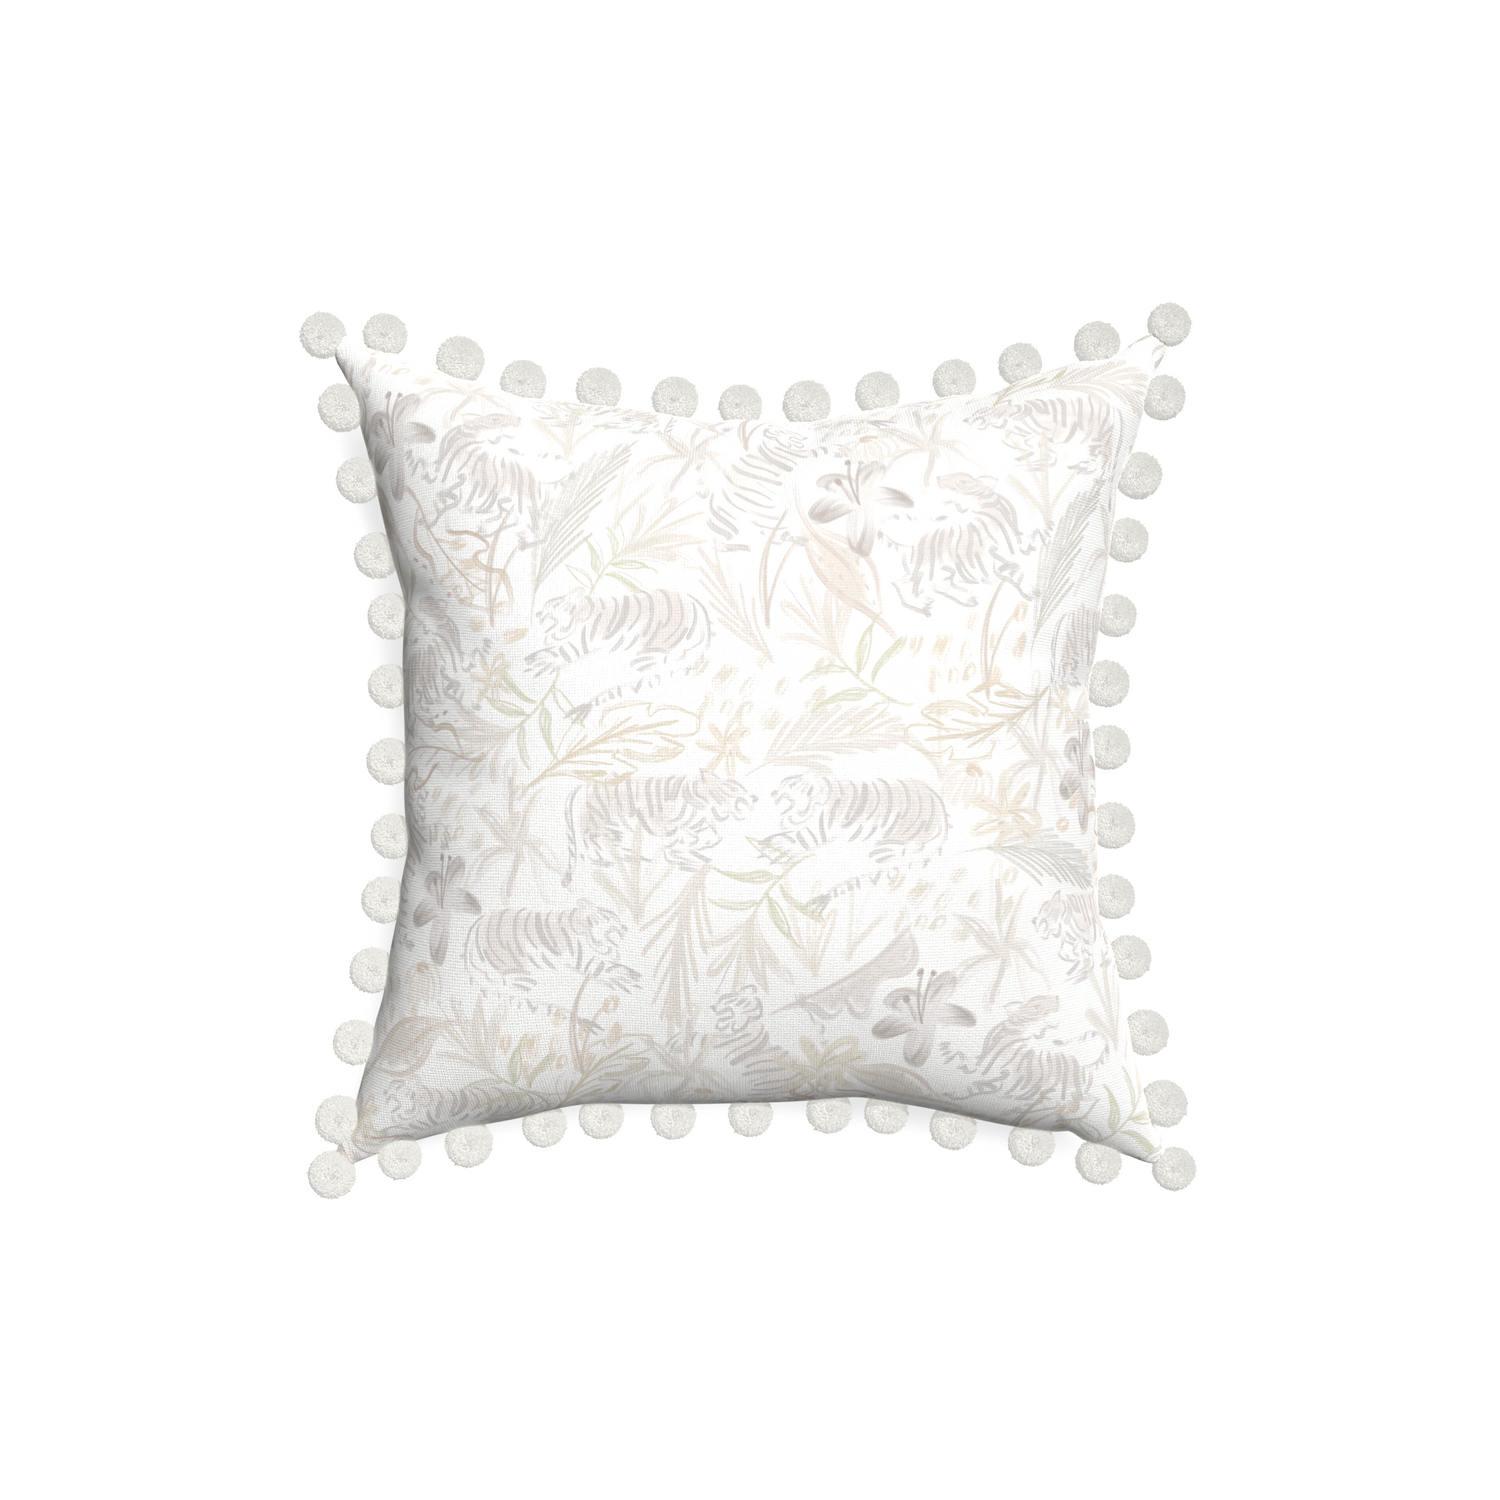 18-square frida sand custom pillow with snow pom pom on white background